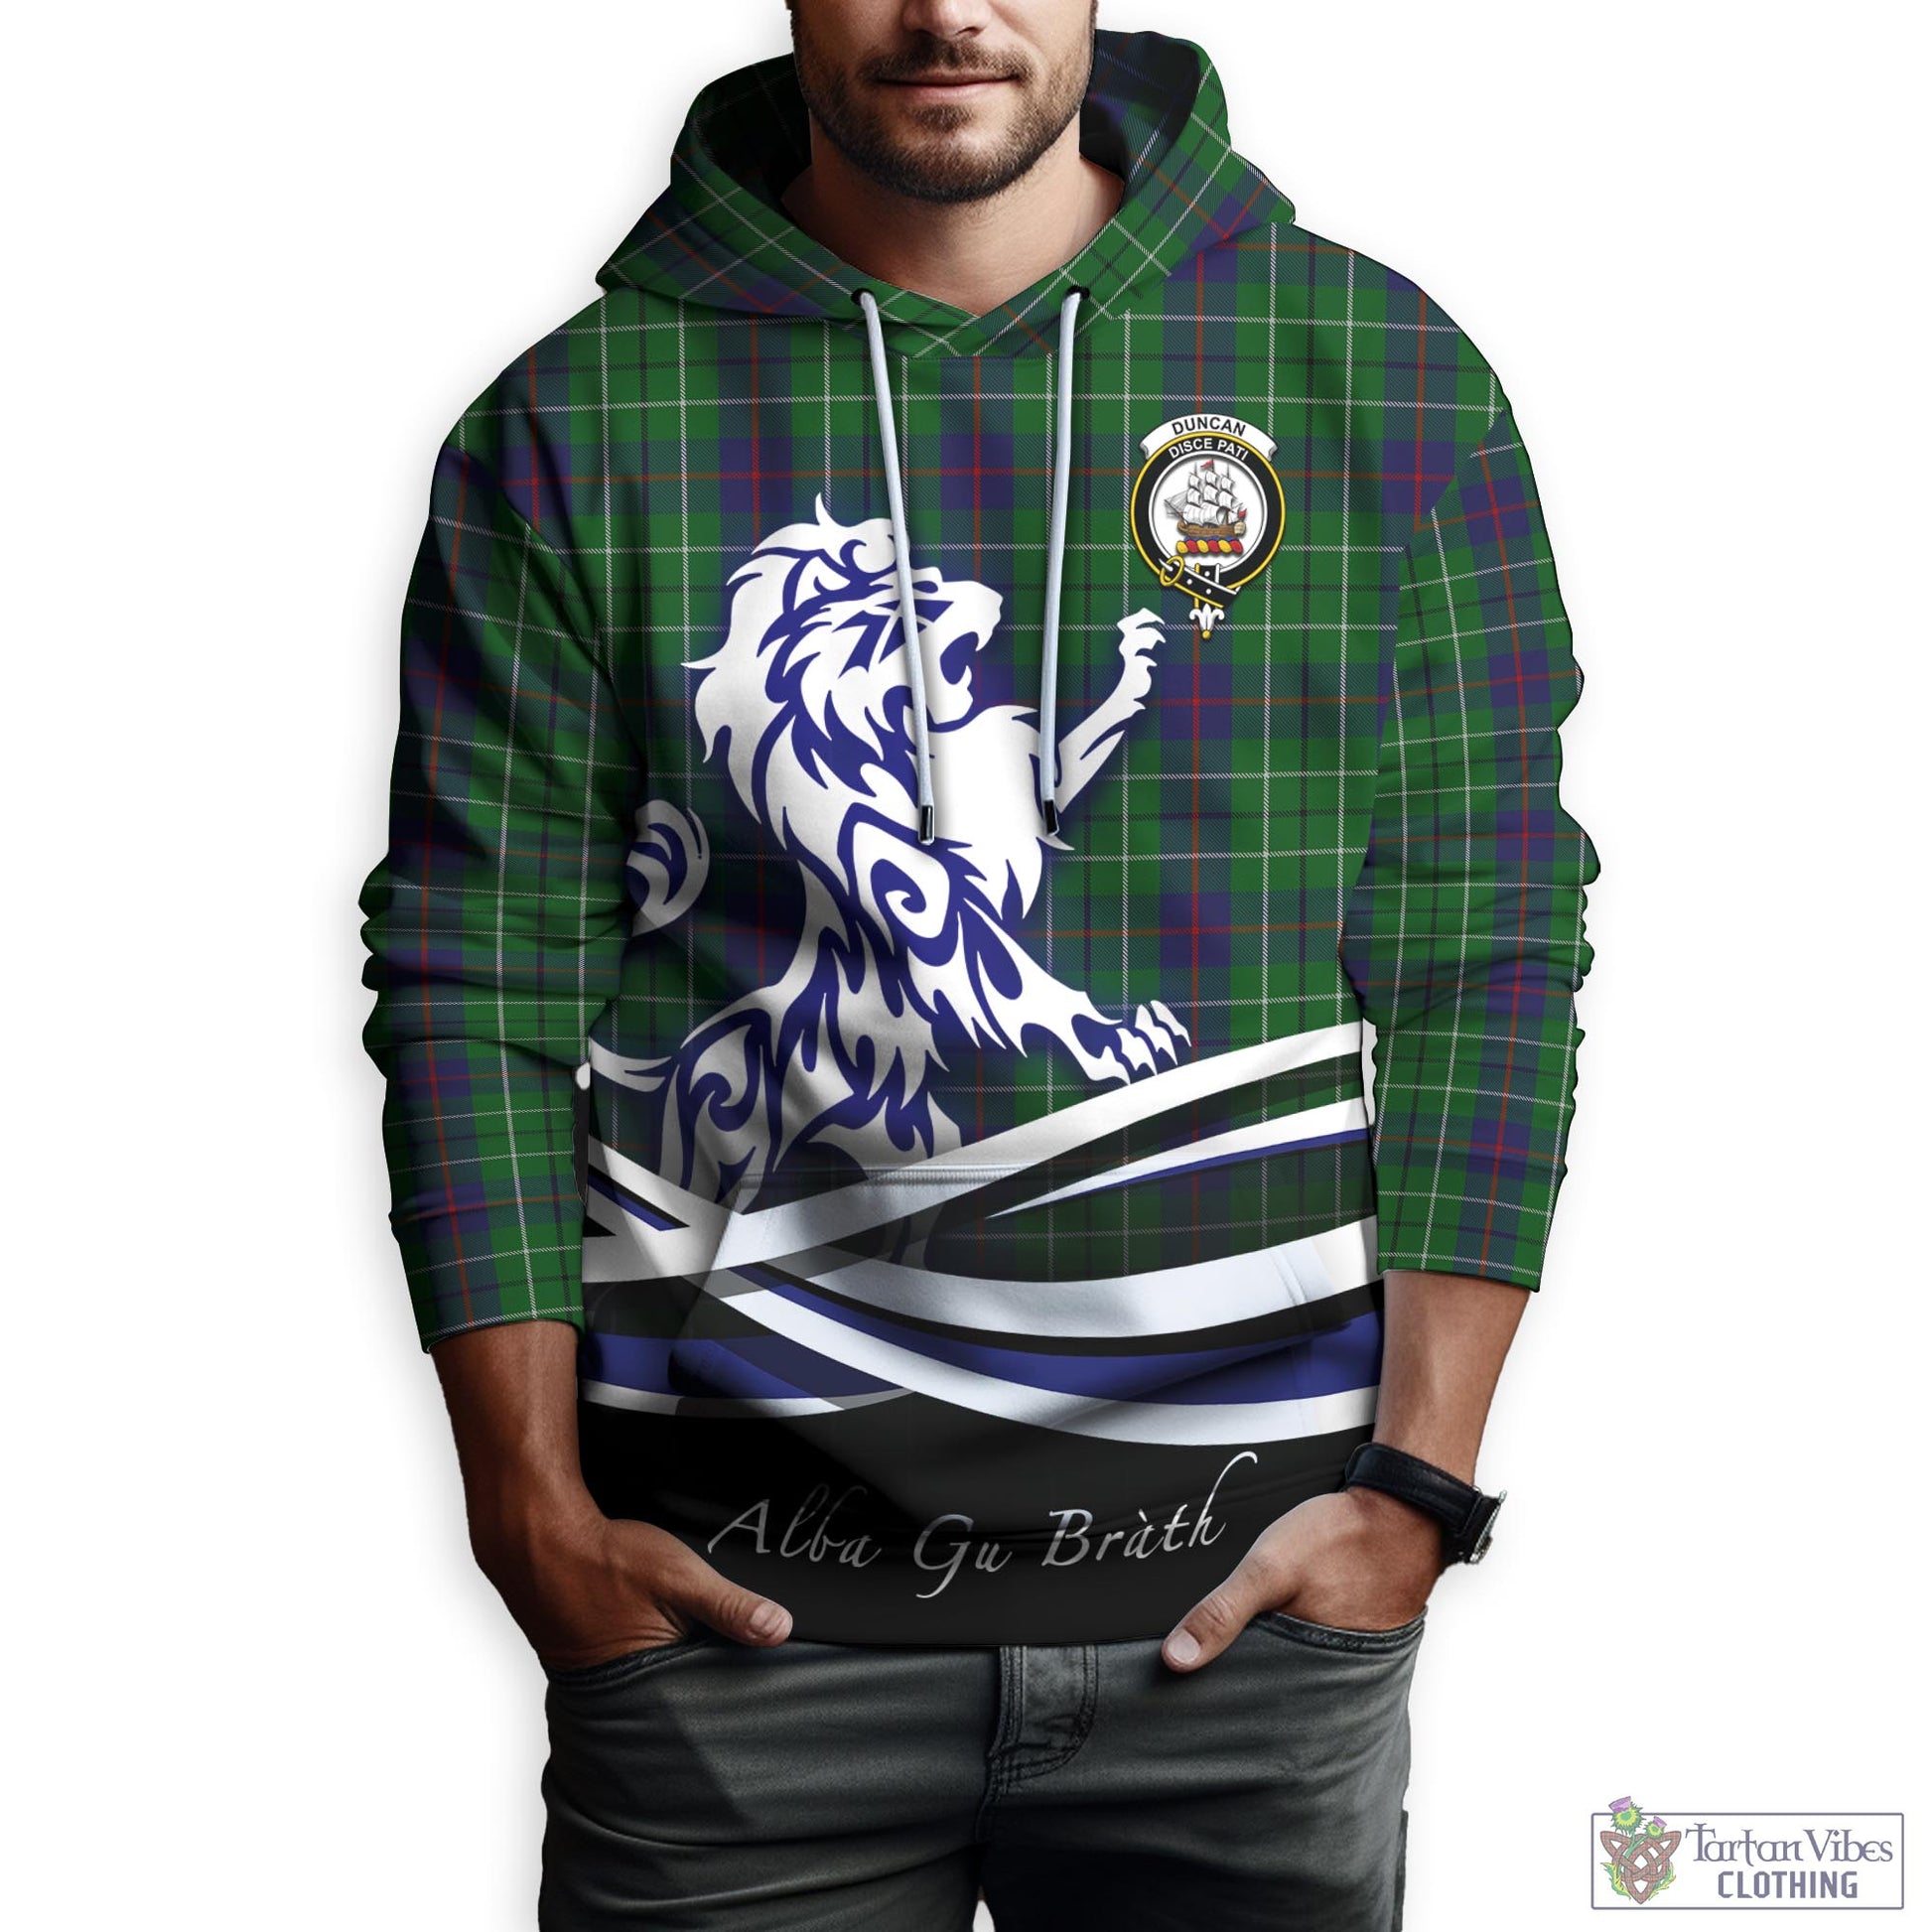 duncan-tartan-hoodie-with-alba-gu-brath-regal-lion-emblem